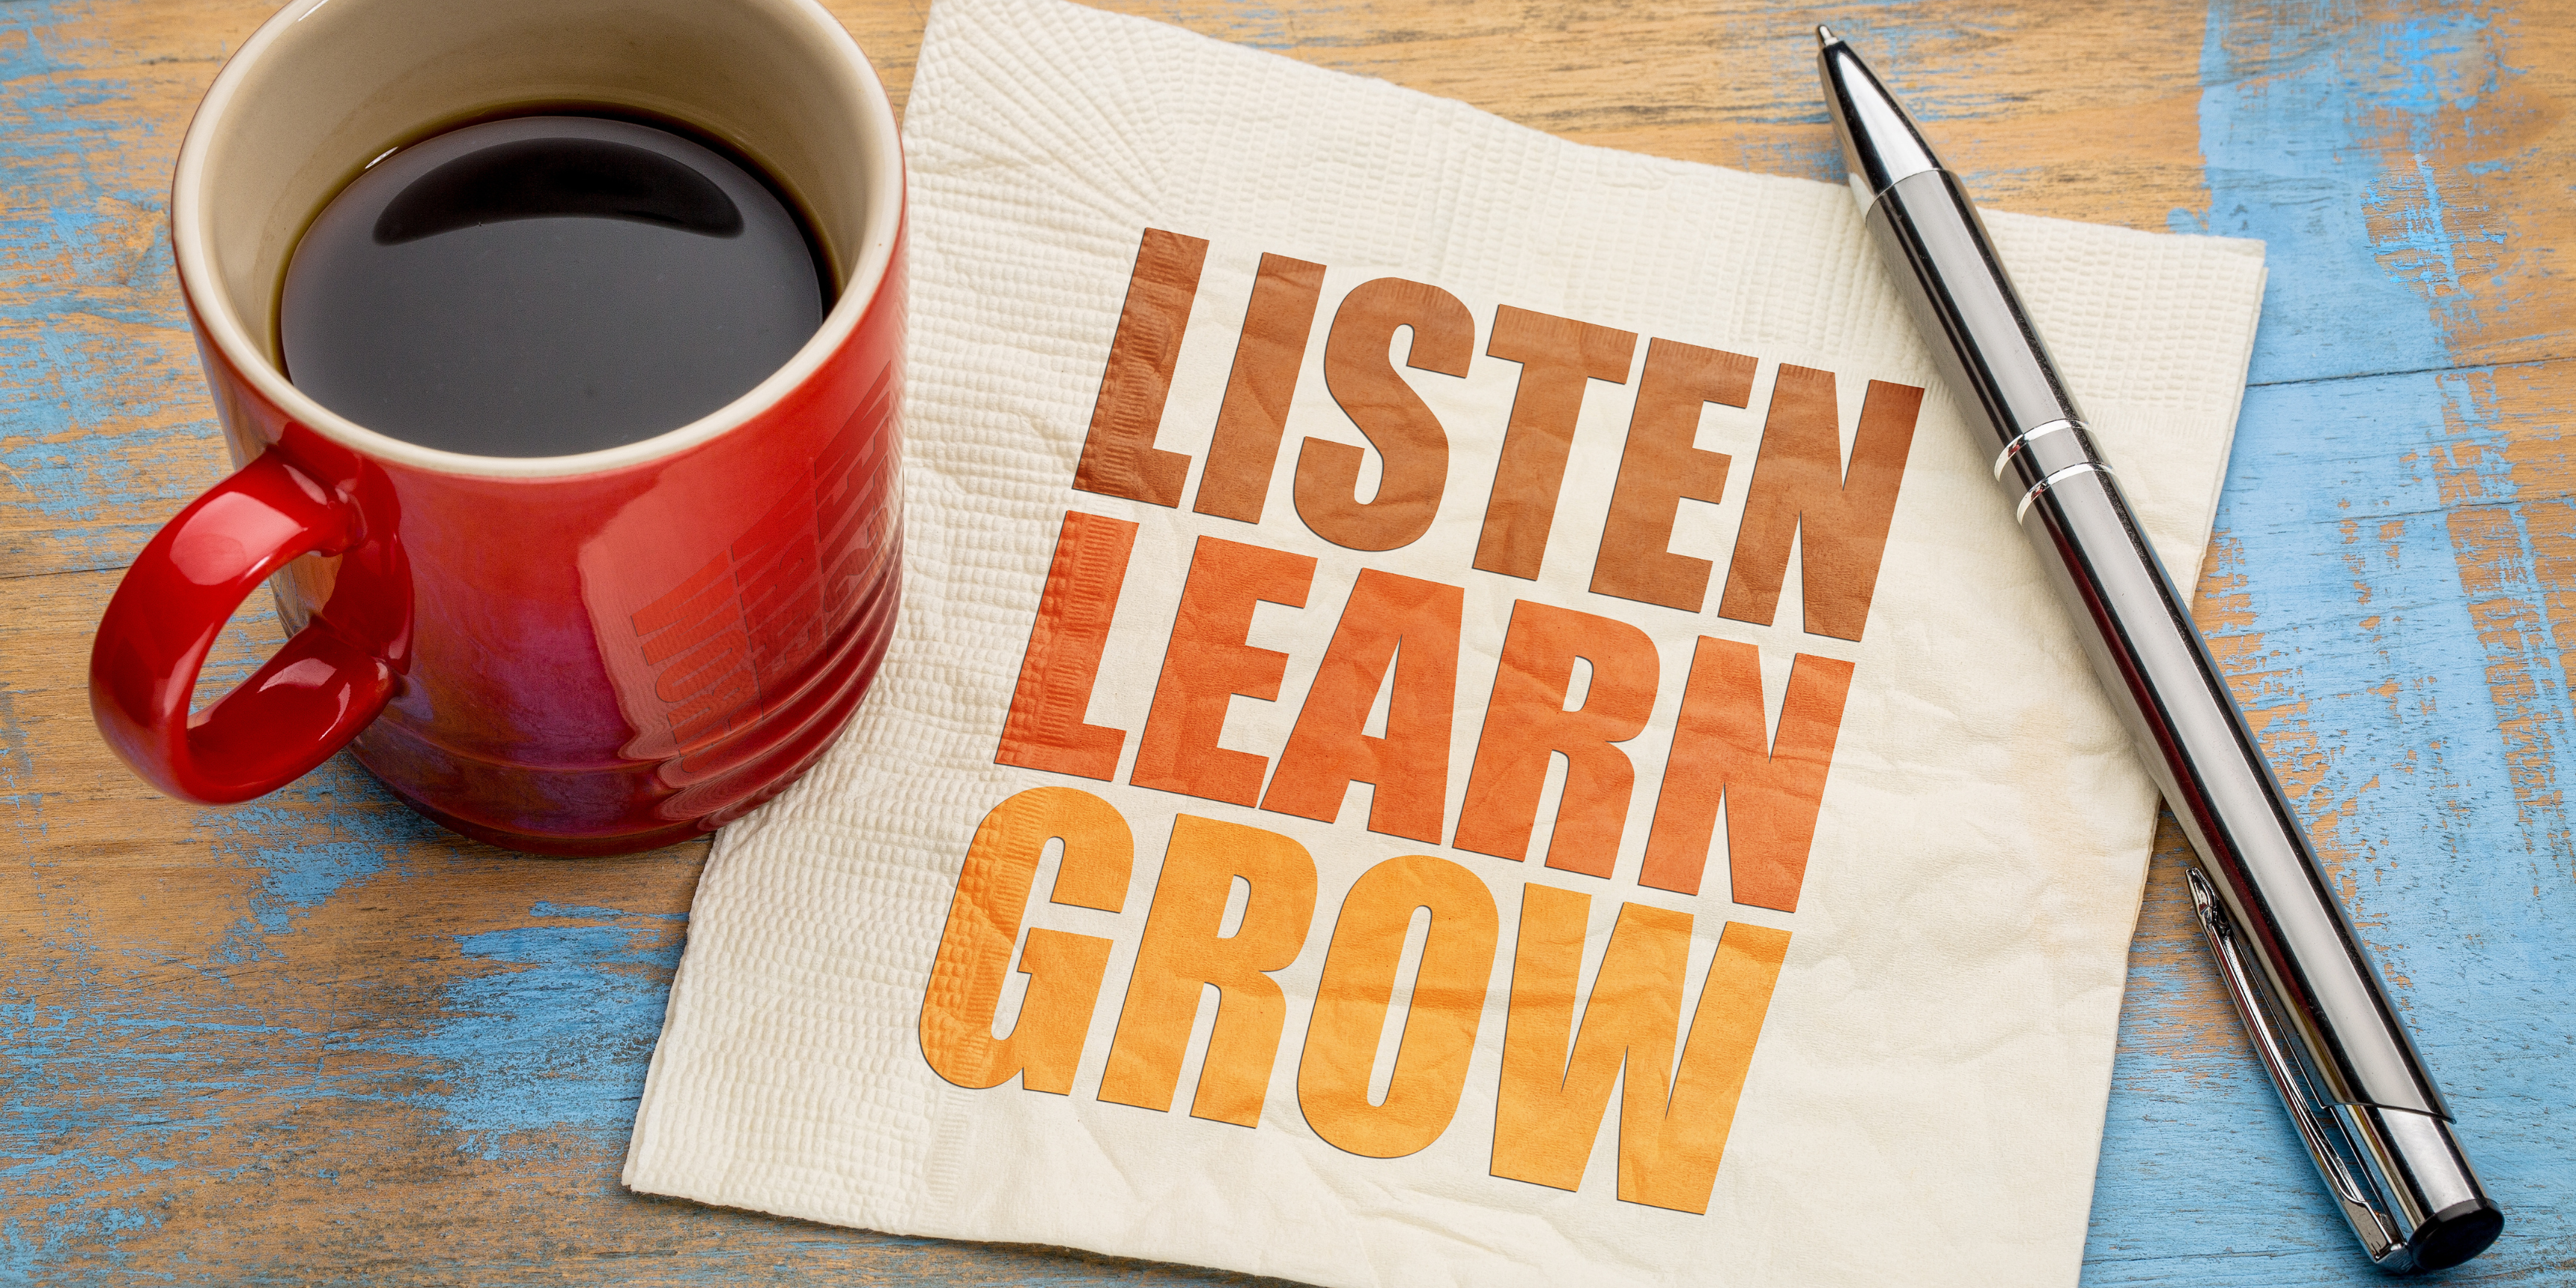 Listen, Learn, Grow